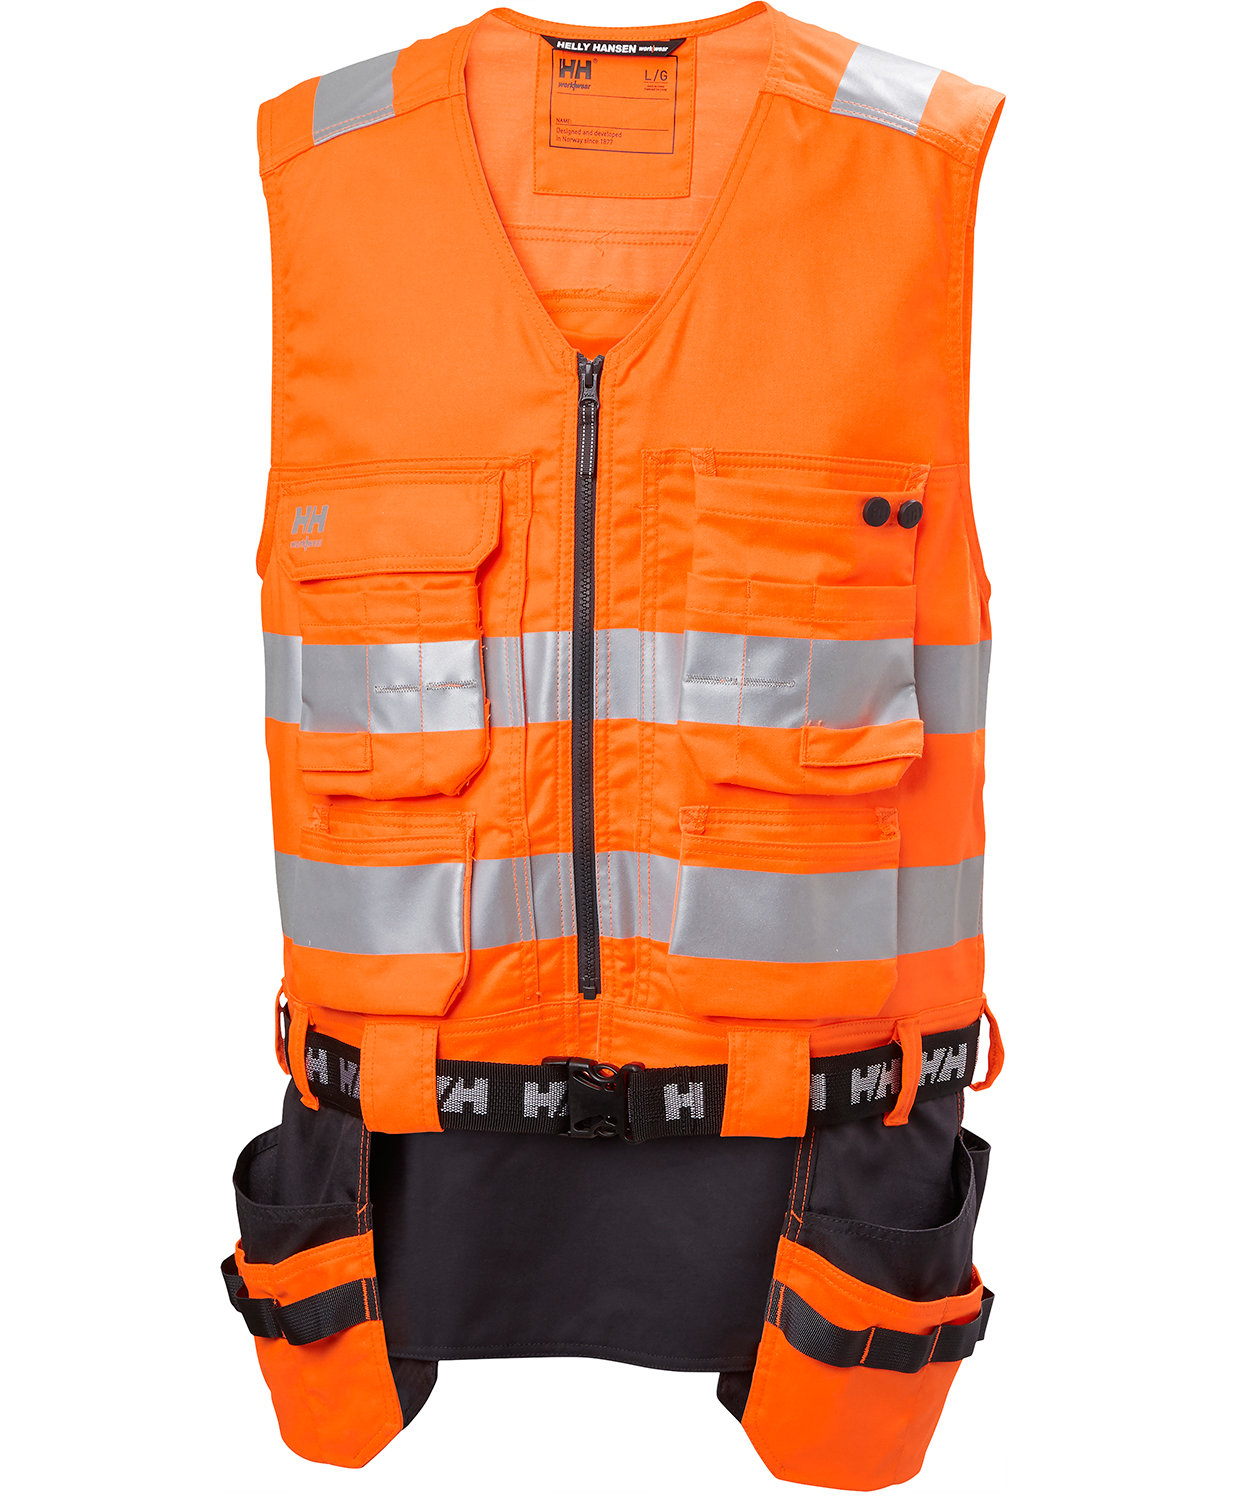 Buy Helly Hansen Alna 2.0 tool vest at Cheap-workwear.com